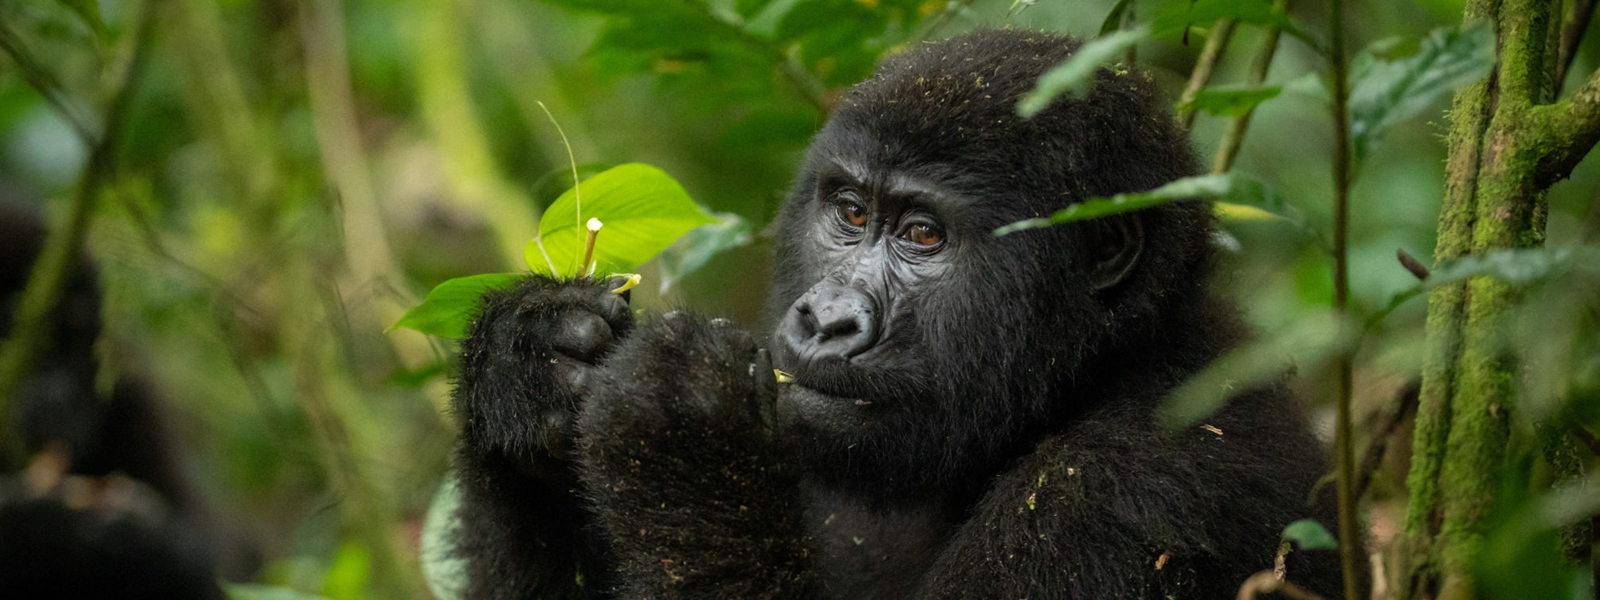 Gorilla Safari and Wildlife in Uganda-15 Days - Amakula African Safaris